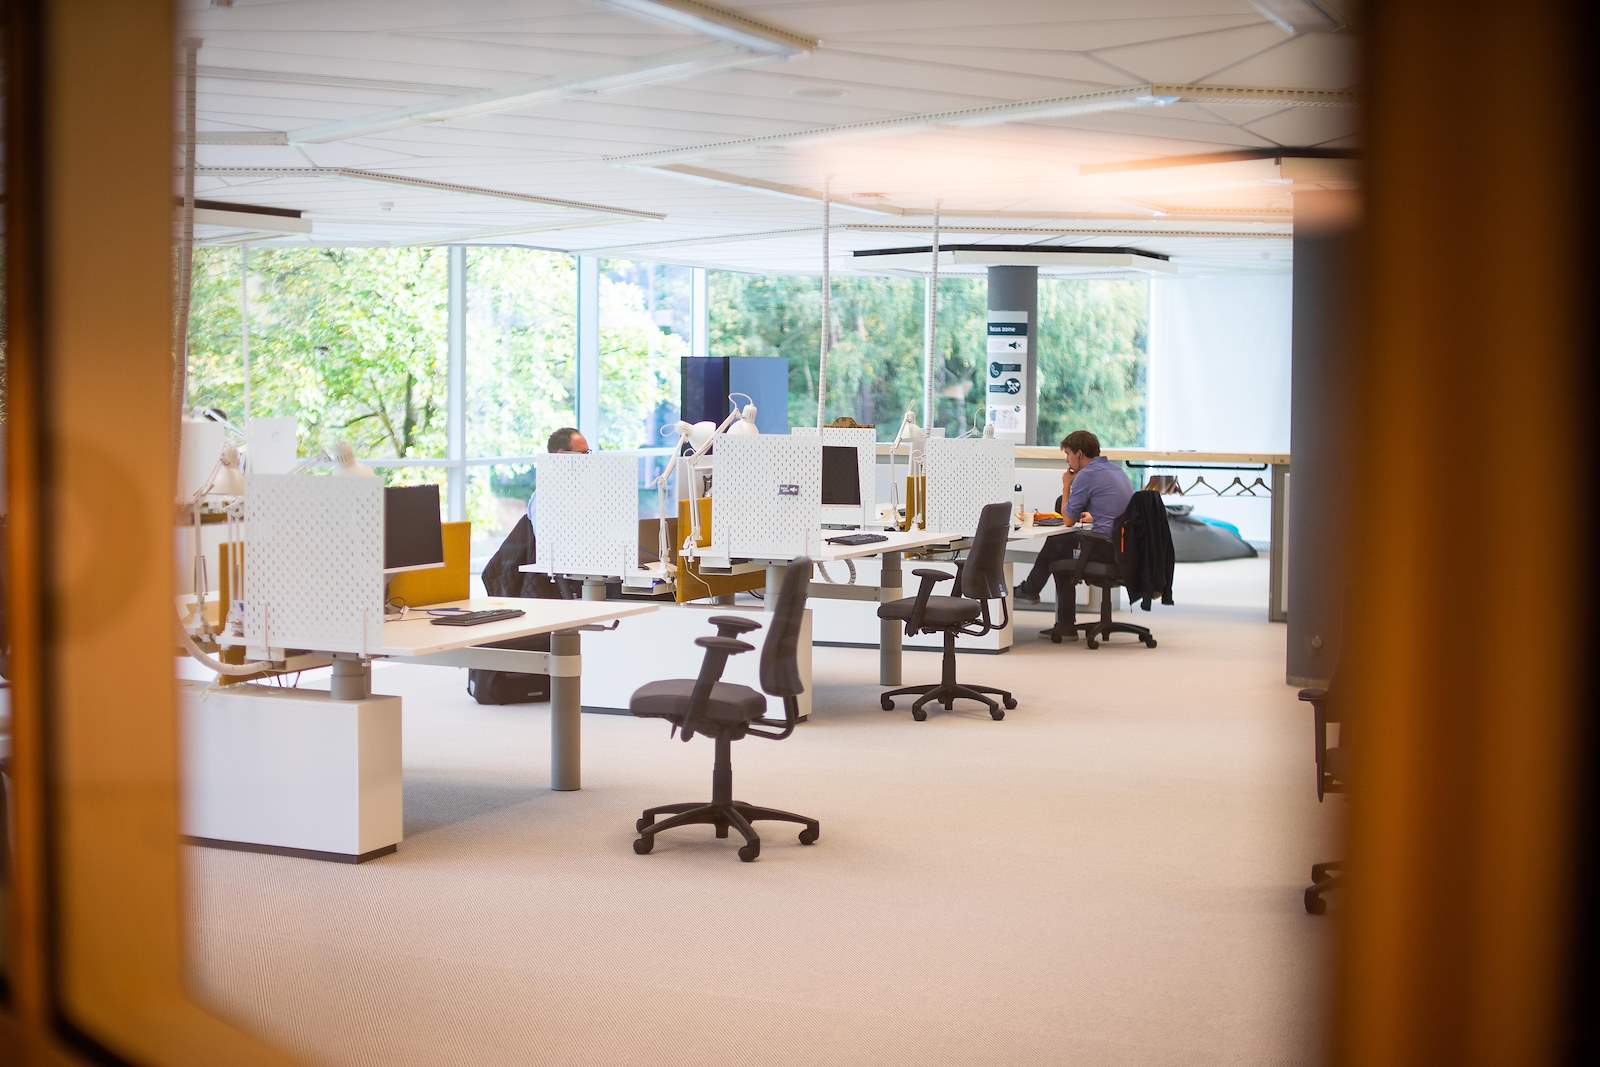 Suitable workplace environment, Royal HaskoningDHV Amersfoort, The Netherlands